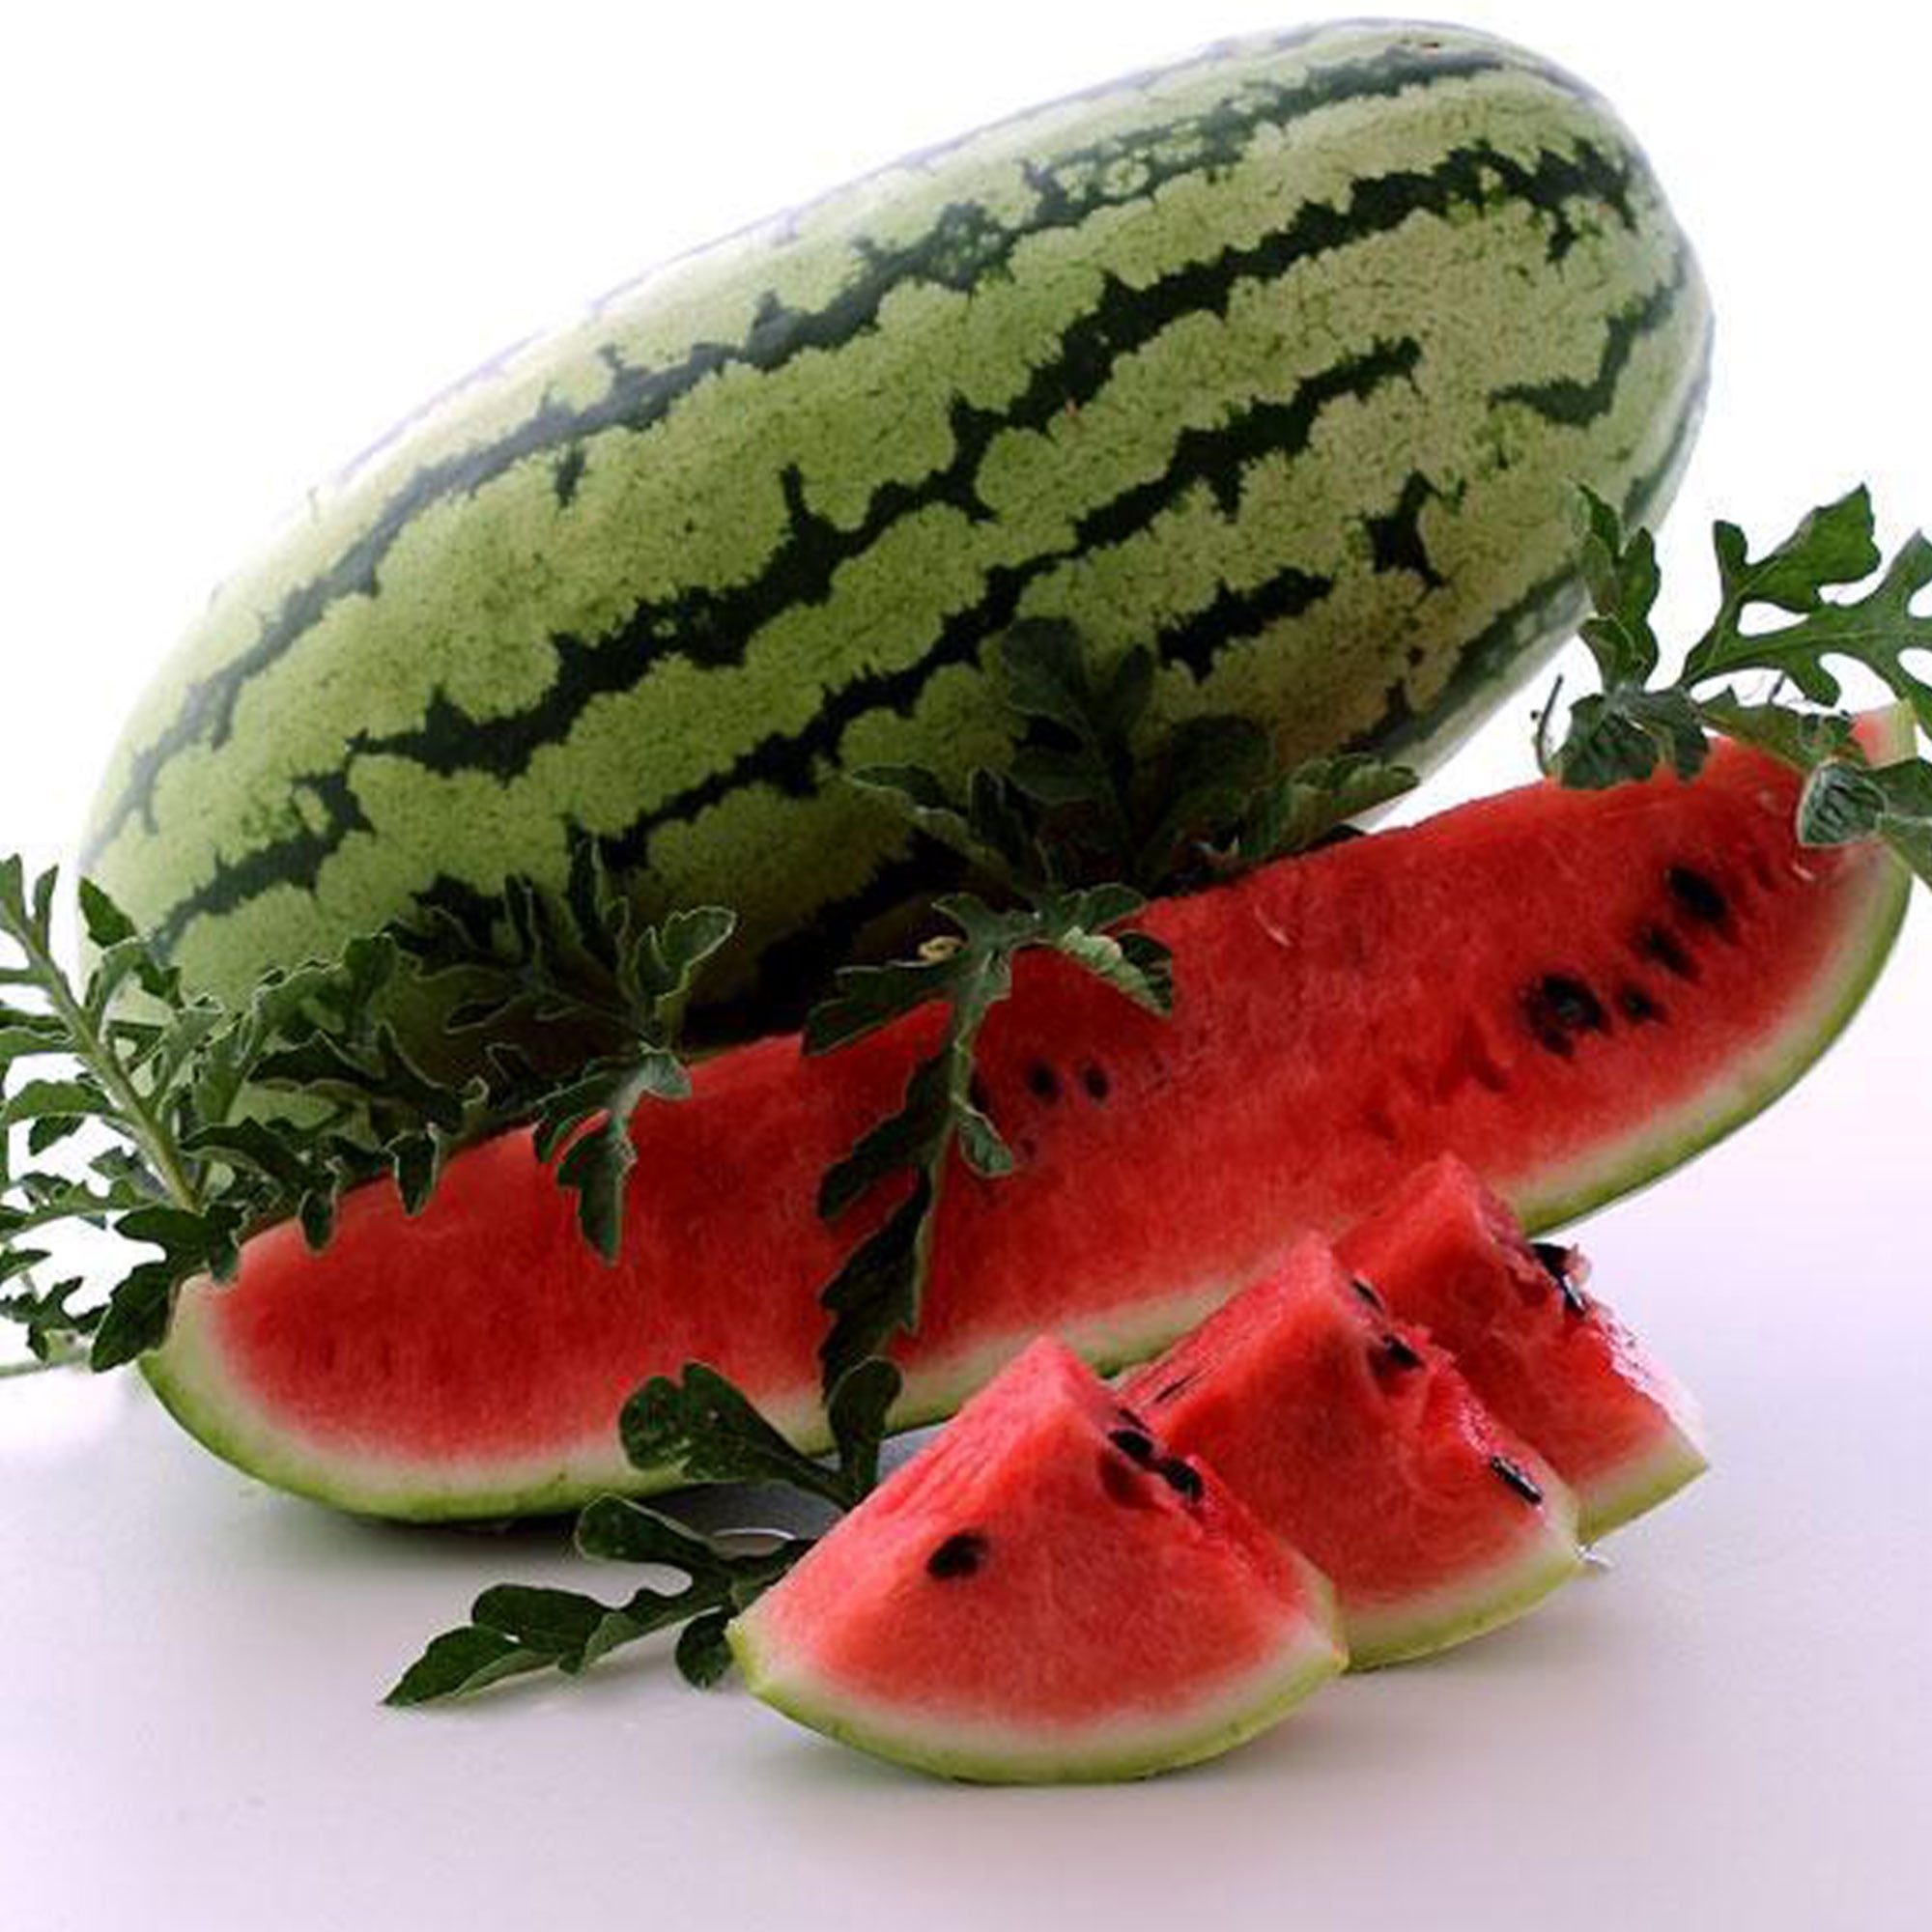 50 Heirloom Non-gmo Seeds,USA SELLER FREE SHIPPING Charleston Gray Watermelon